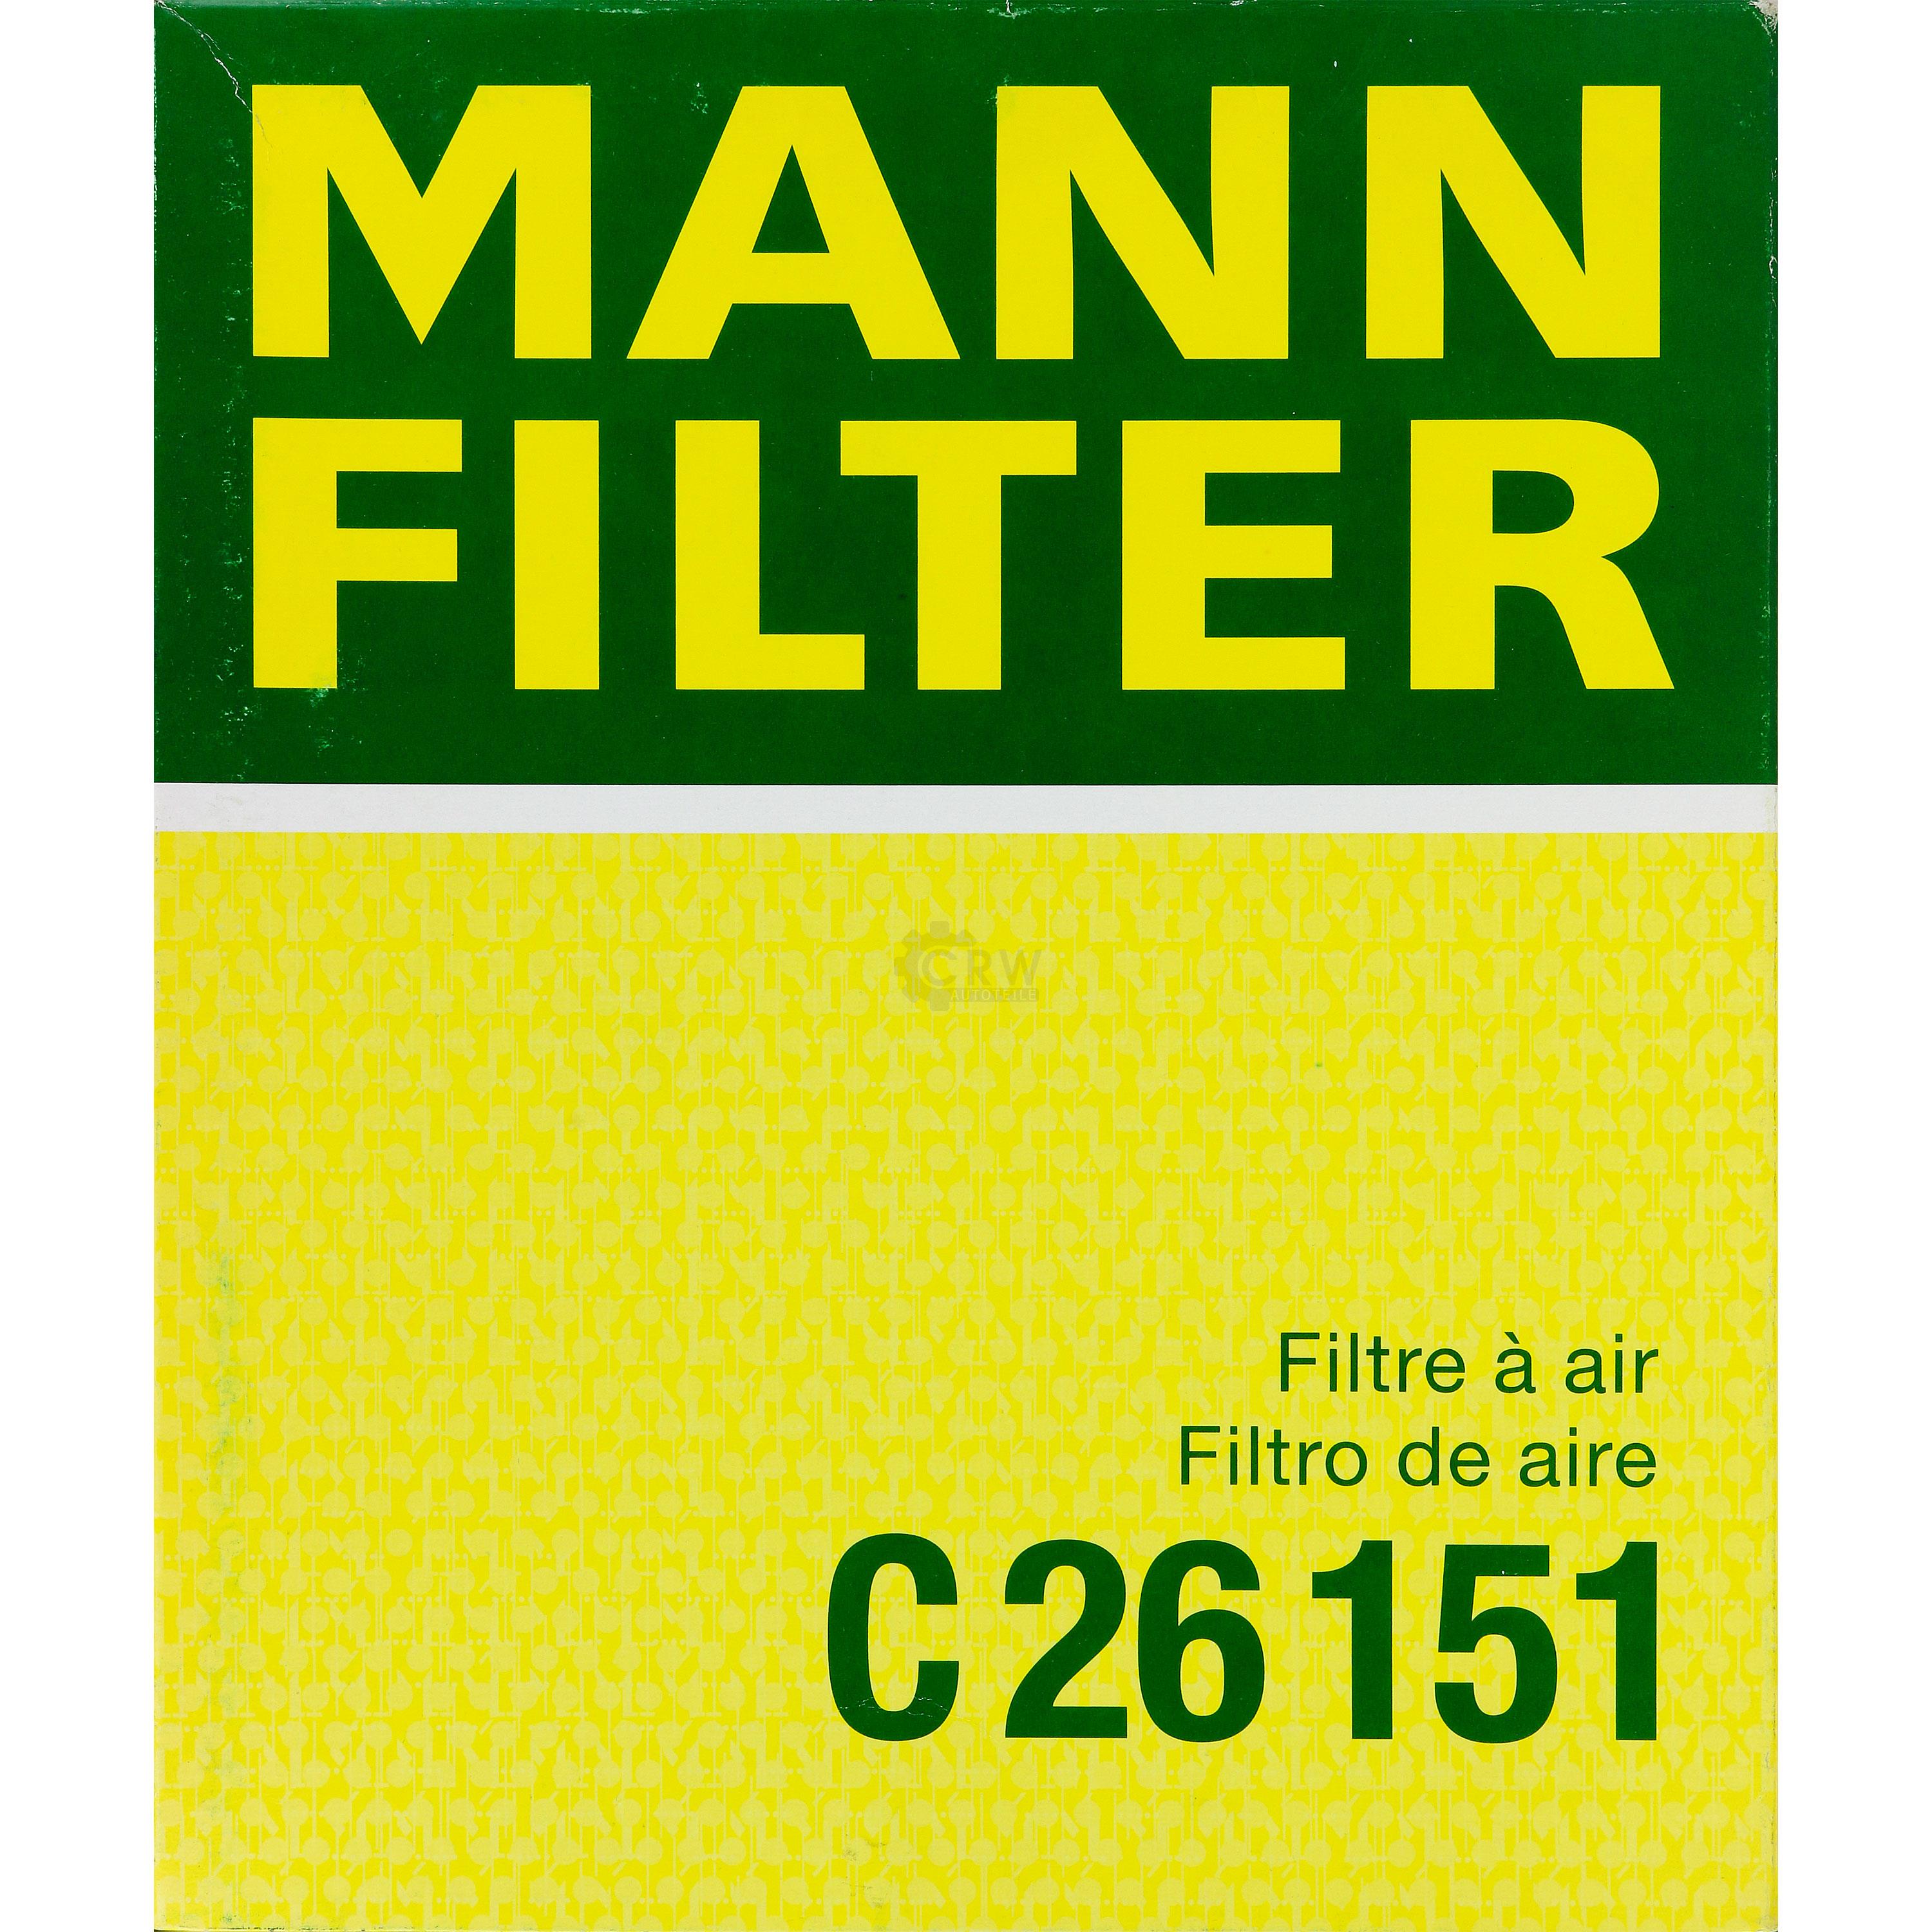 MANN-FILTER Luftfilter für BMW 7er E38 740i iL 735i E32 730i 5er E39